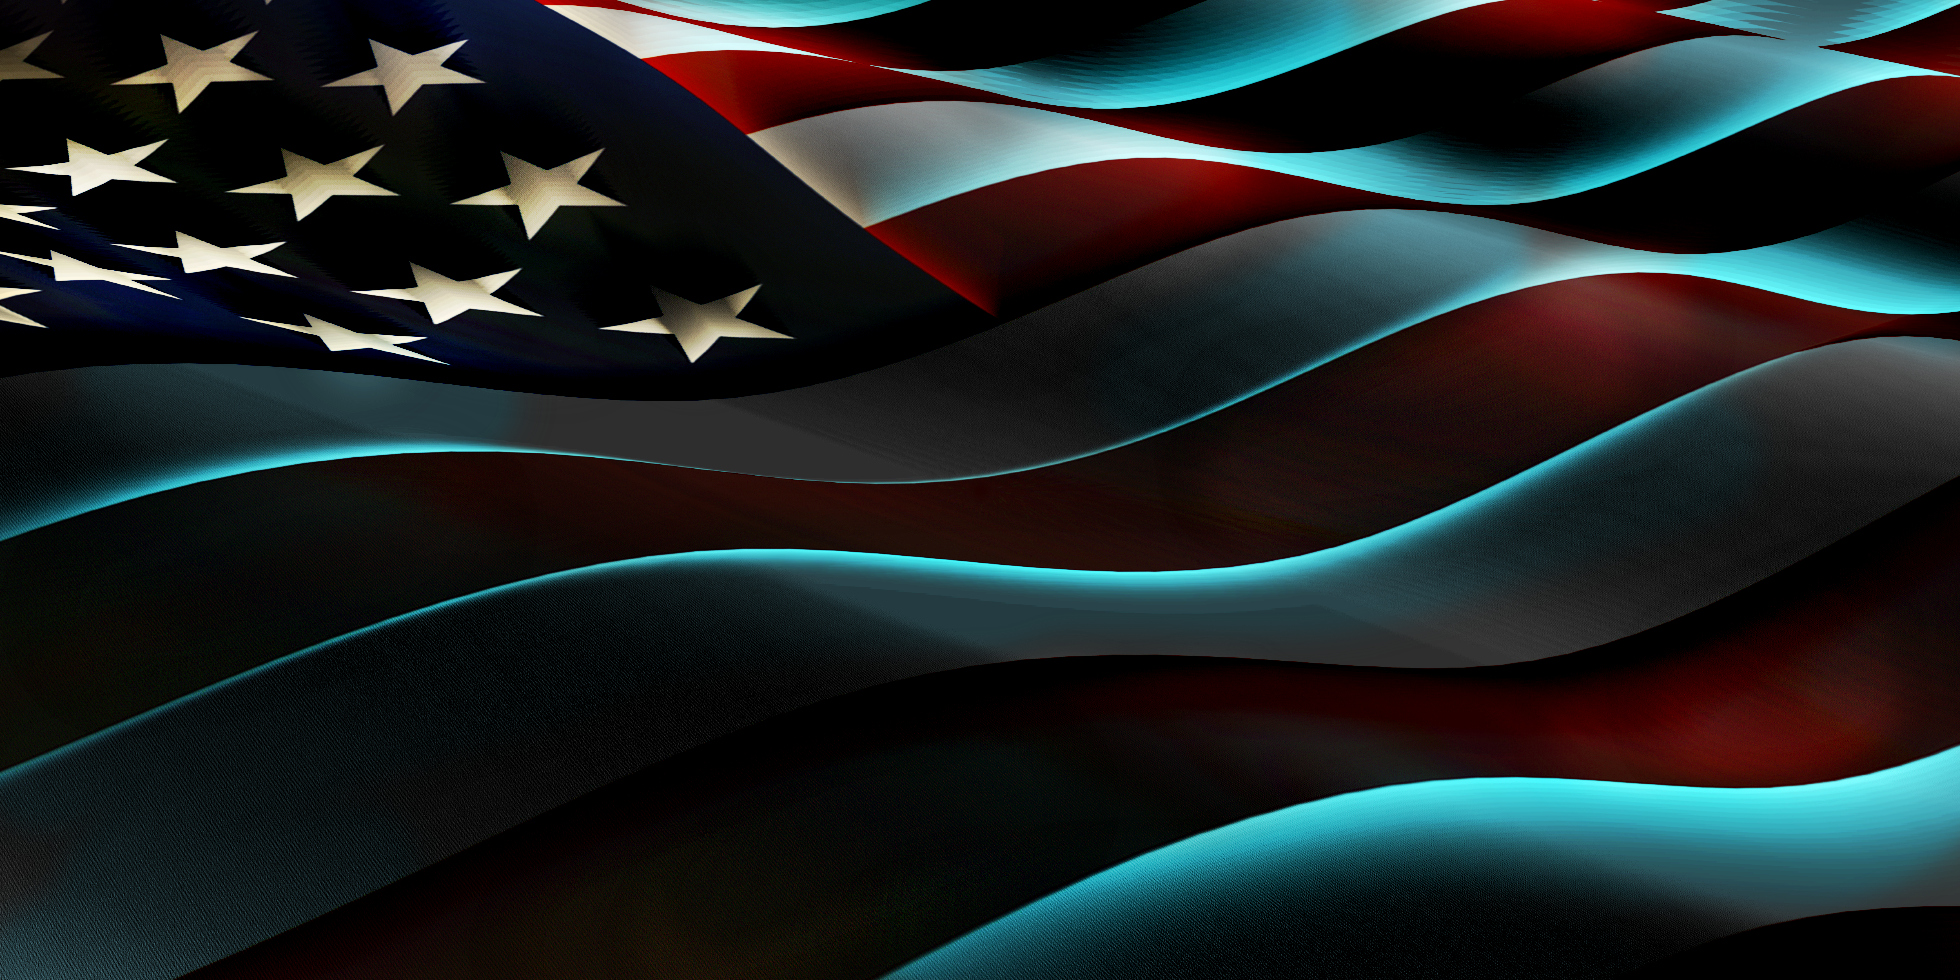 The Beautiful American Flag wallpaper   ForWallpapercom 1960x980